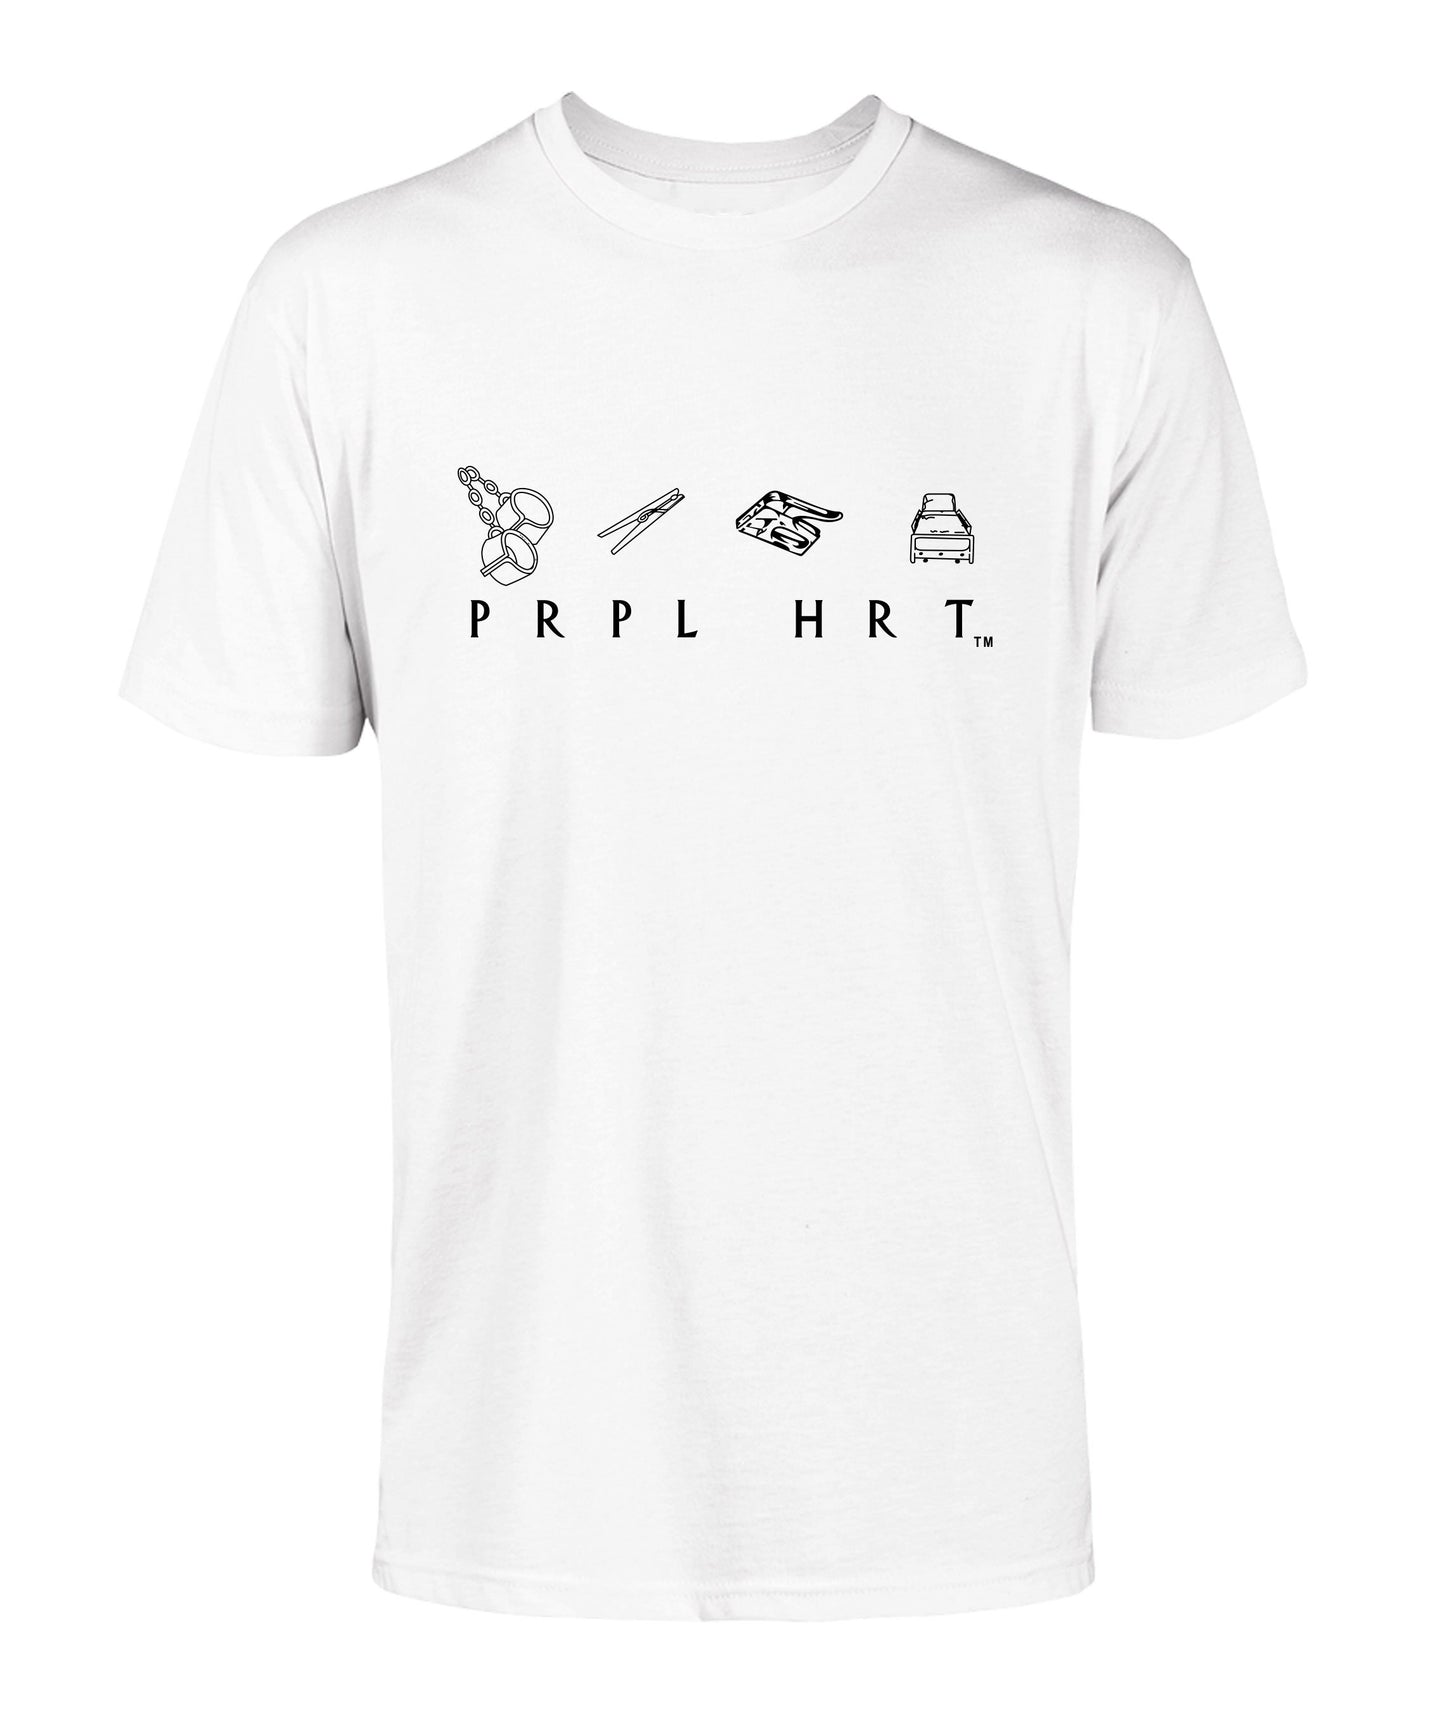 PRPL HRT Toys Men's T-Shirt